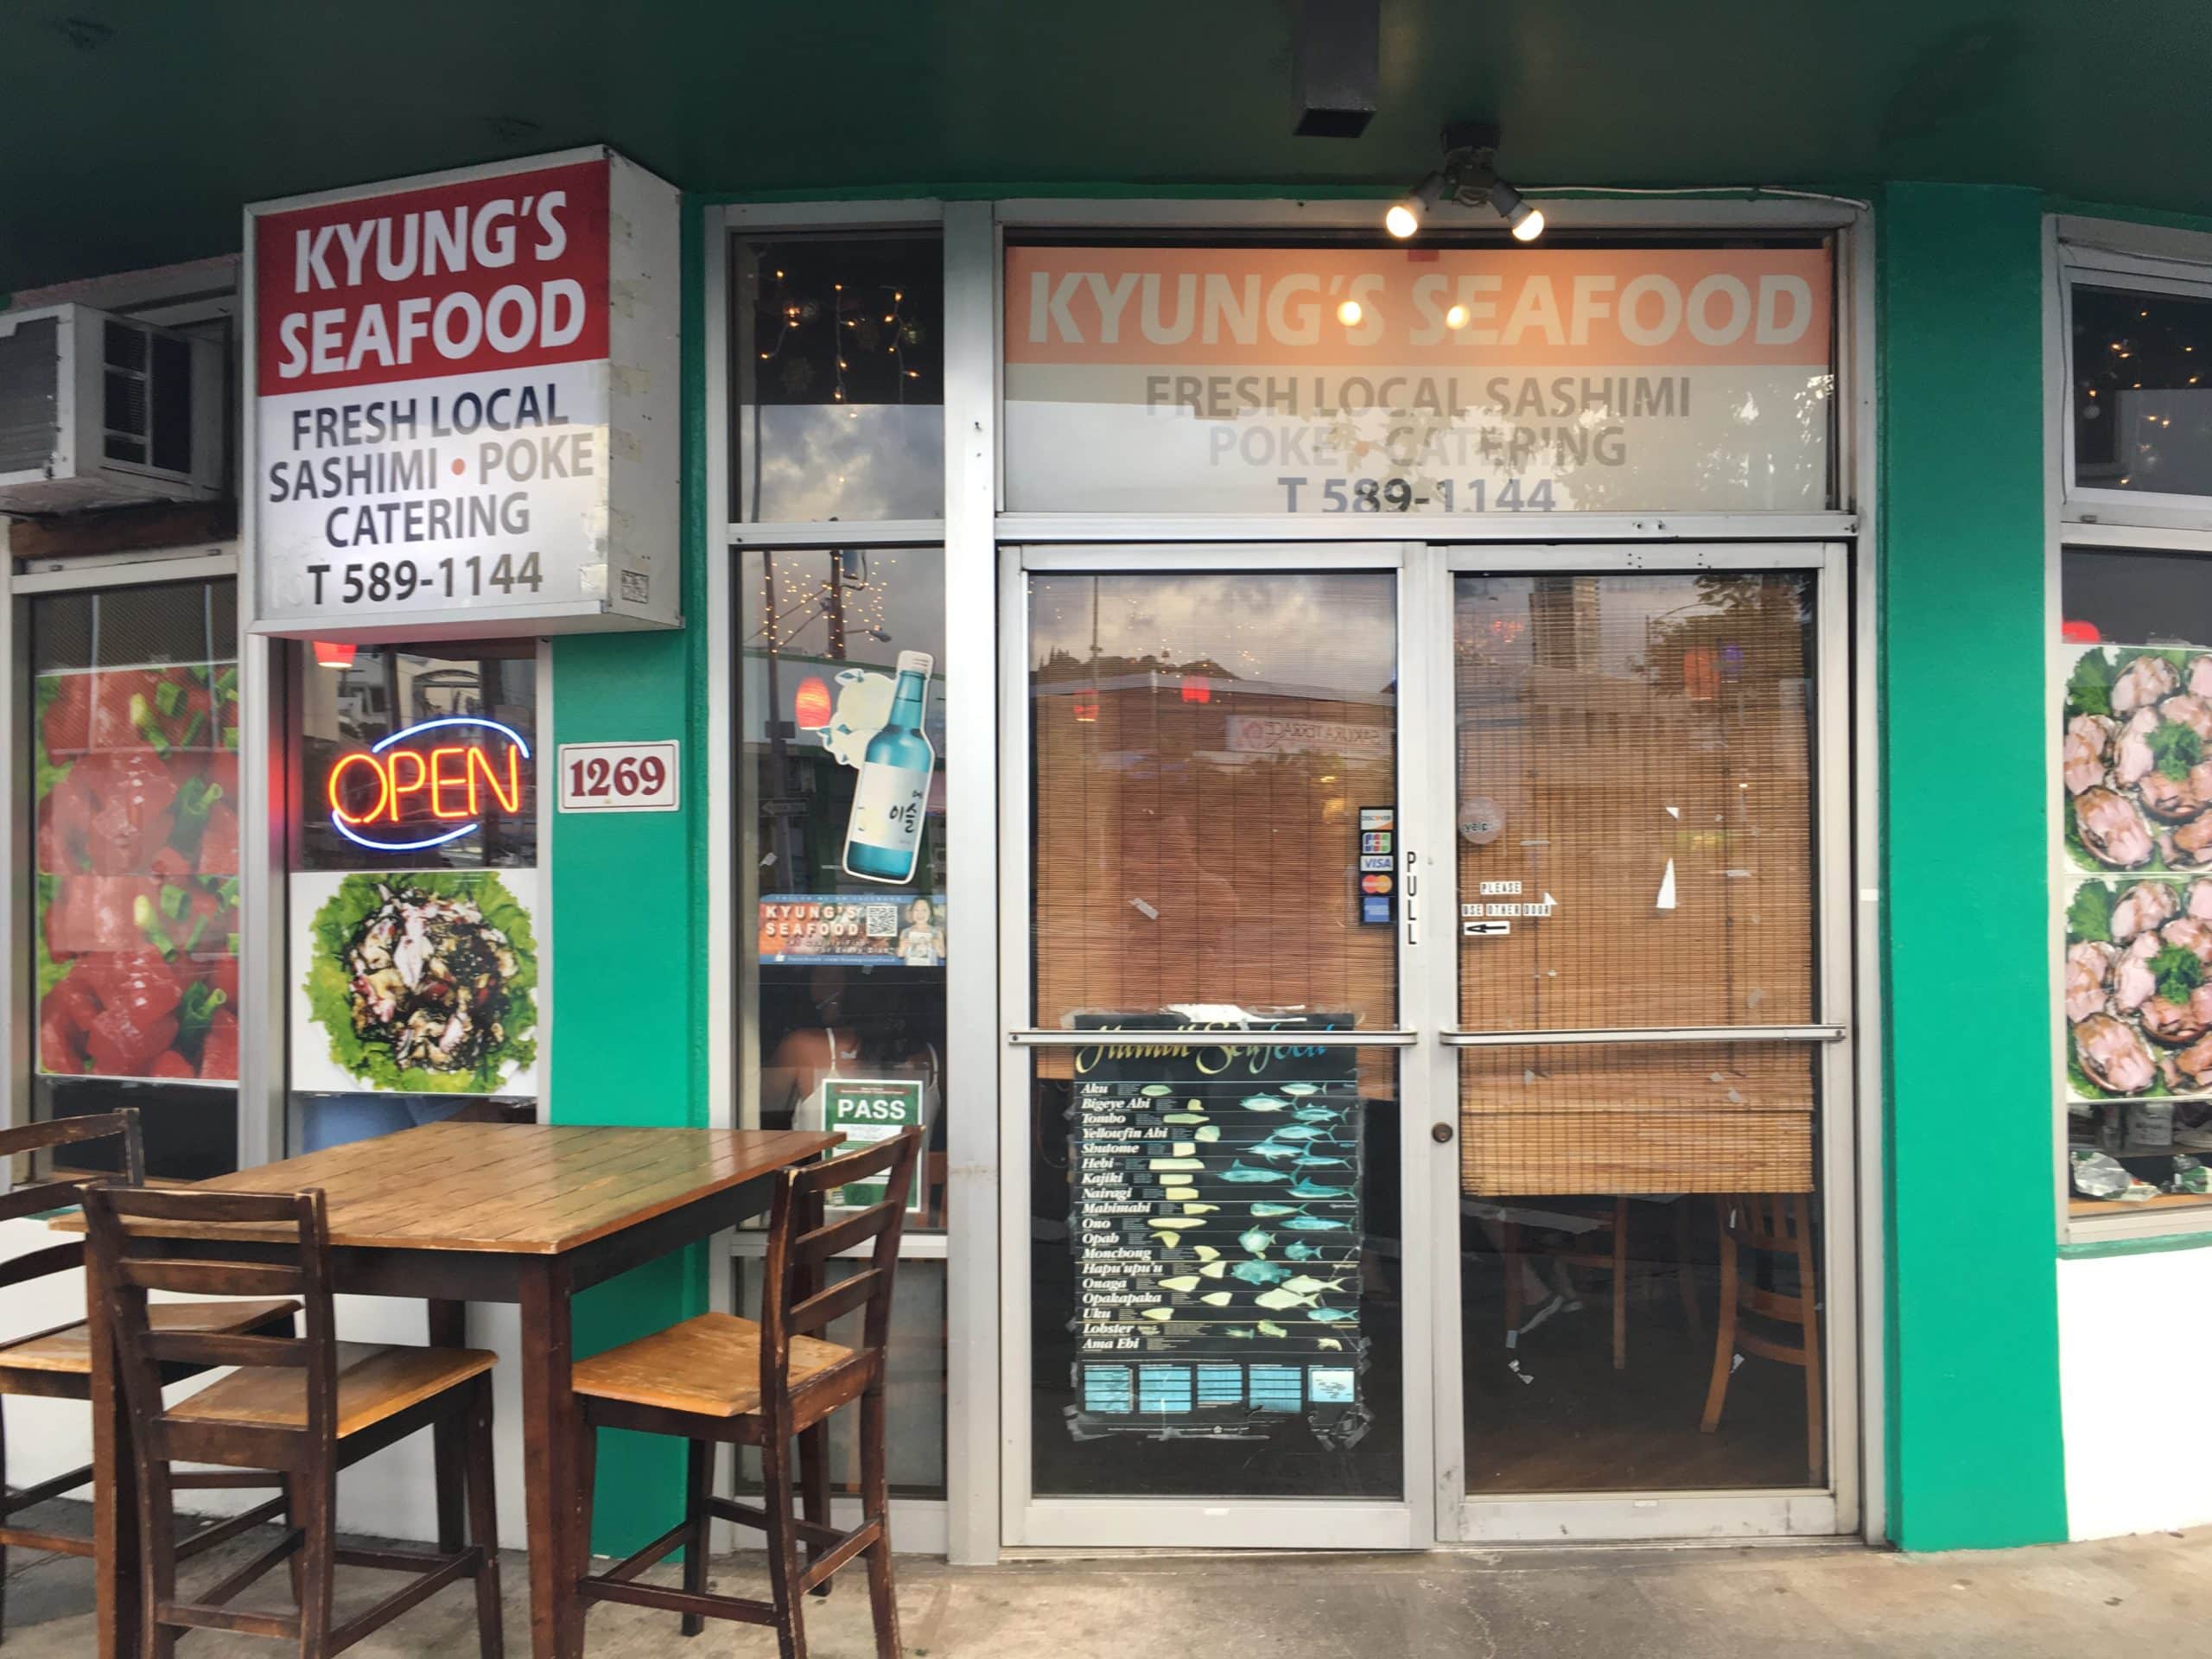 Kyung's Seafood - Paubox